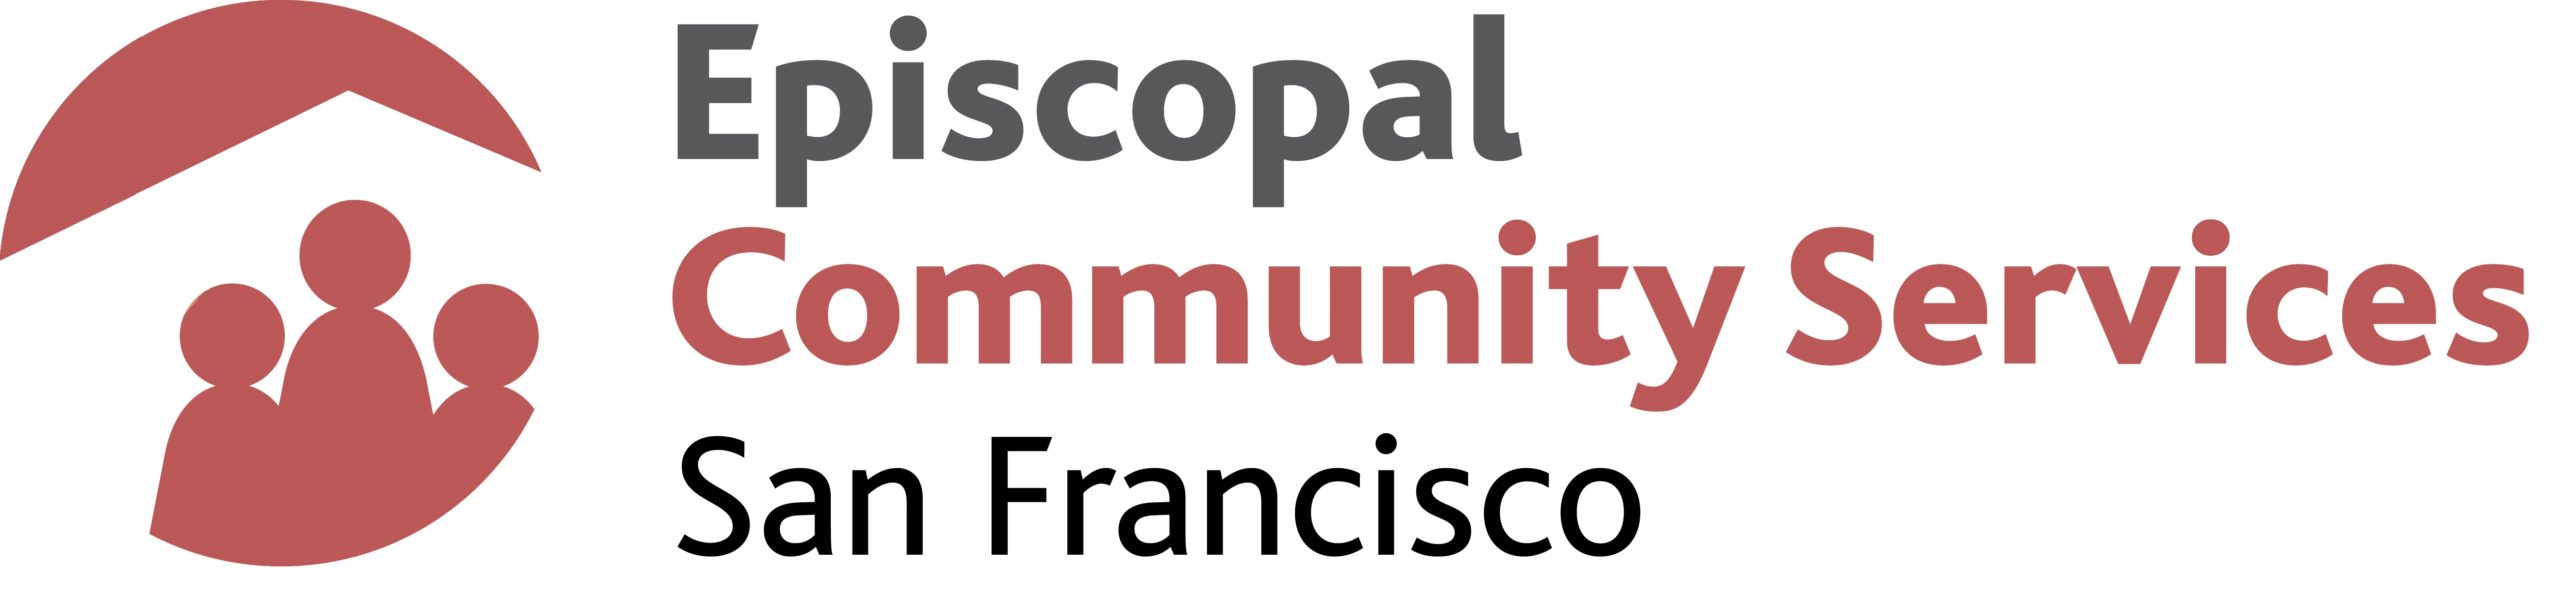 Episcopal Community Services of San Francisco